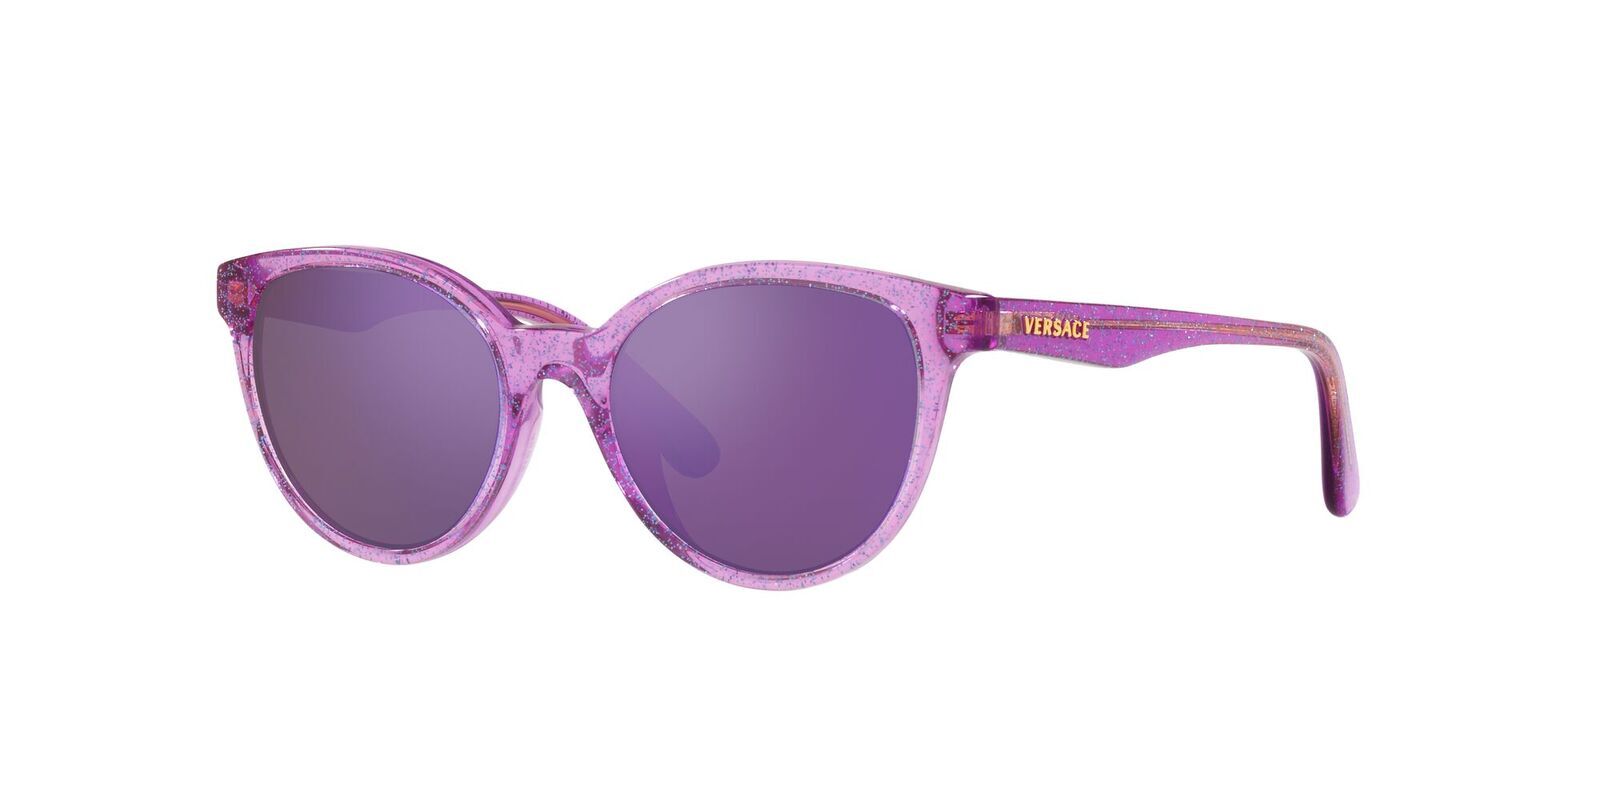 Stylish Violet Versace Sunglasses